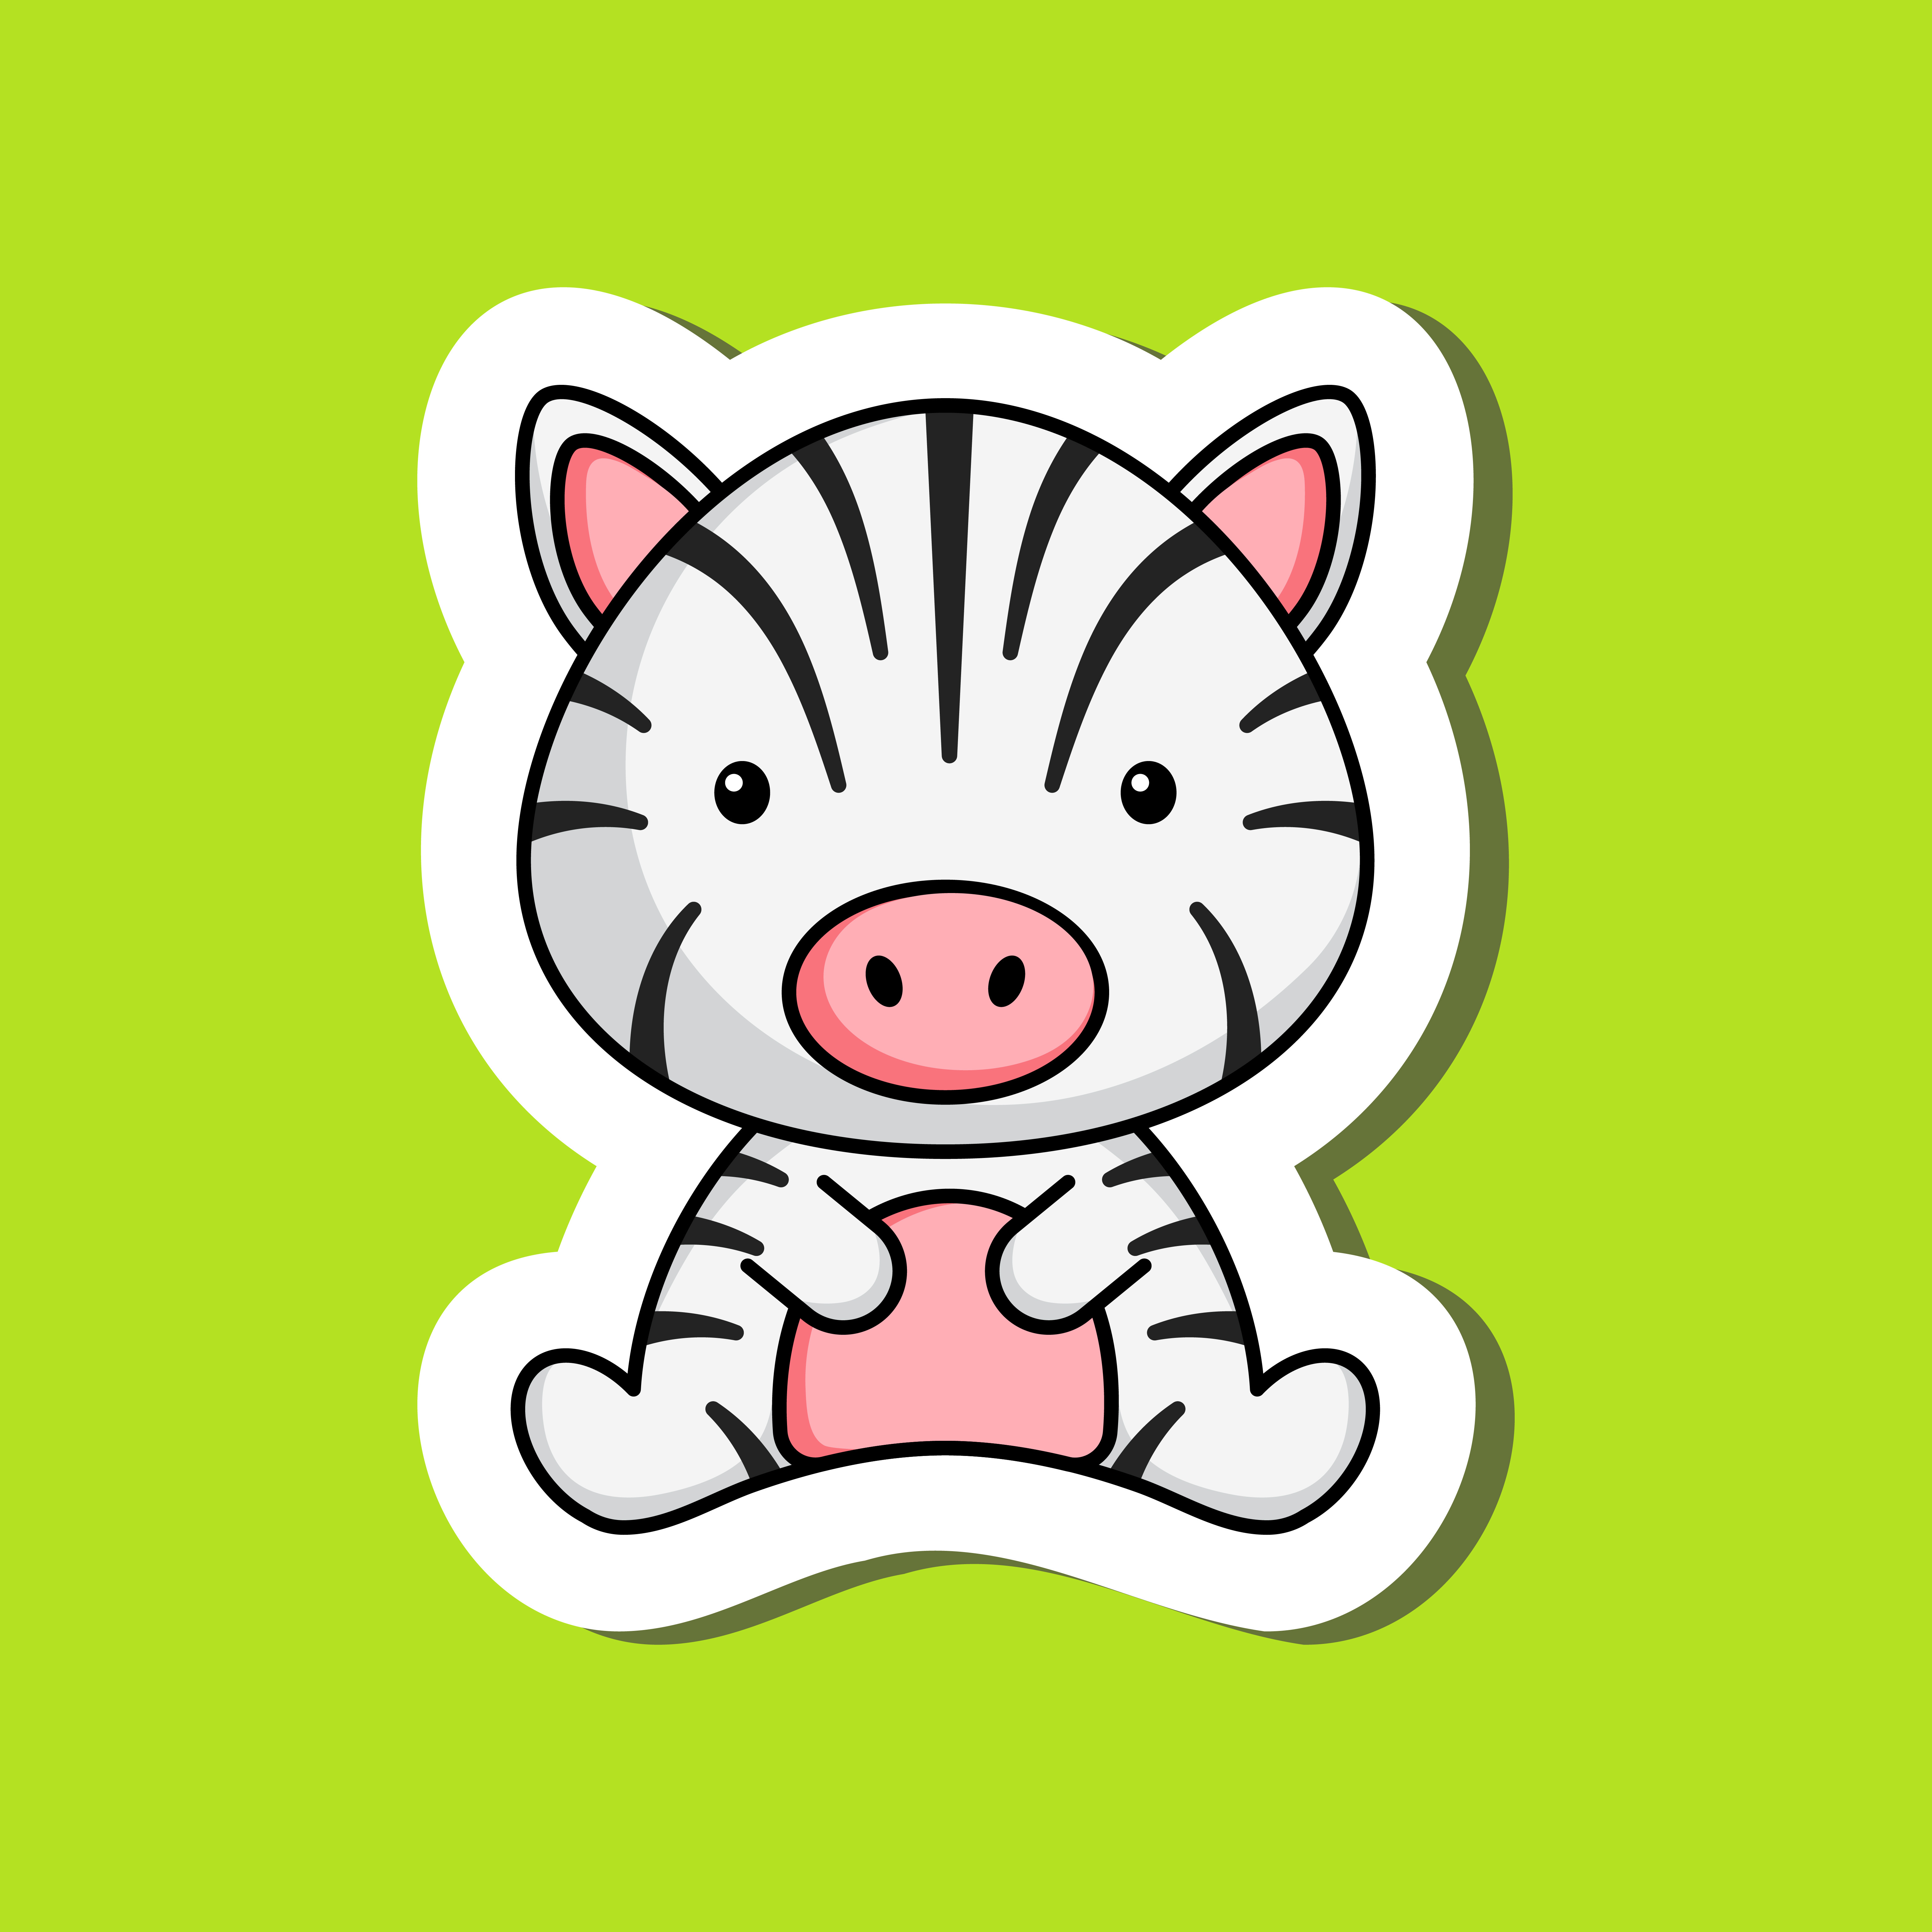 Cute cartoon sticker little zebra logo template. Mascot animal character design of album, scrapbook, greeting card, invitation, flyer, sticker, card. Vector stock illustration.